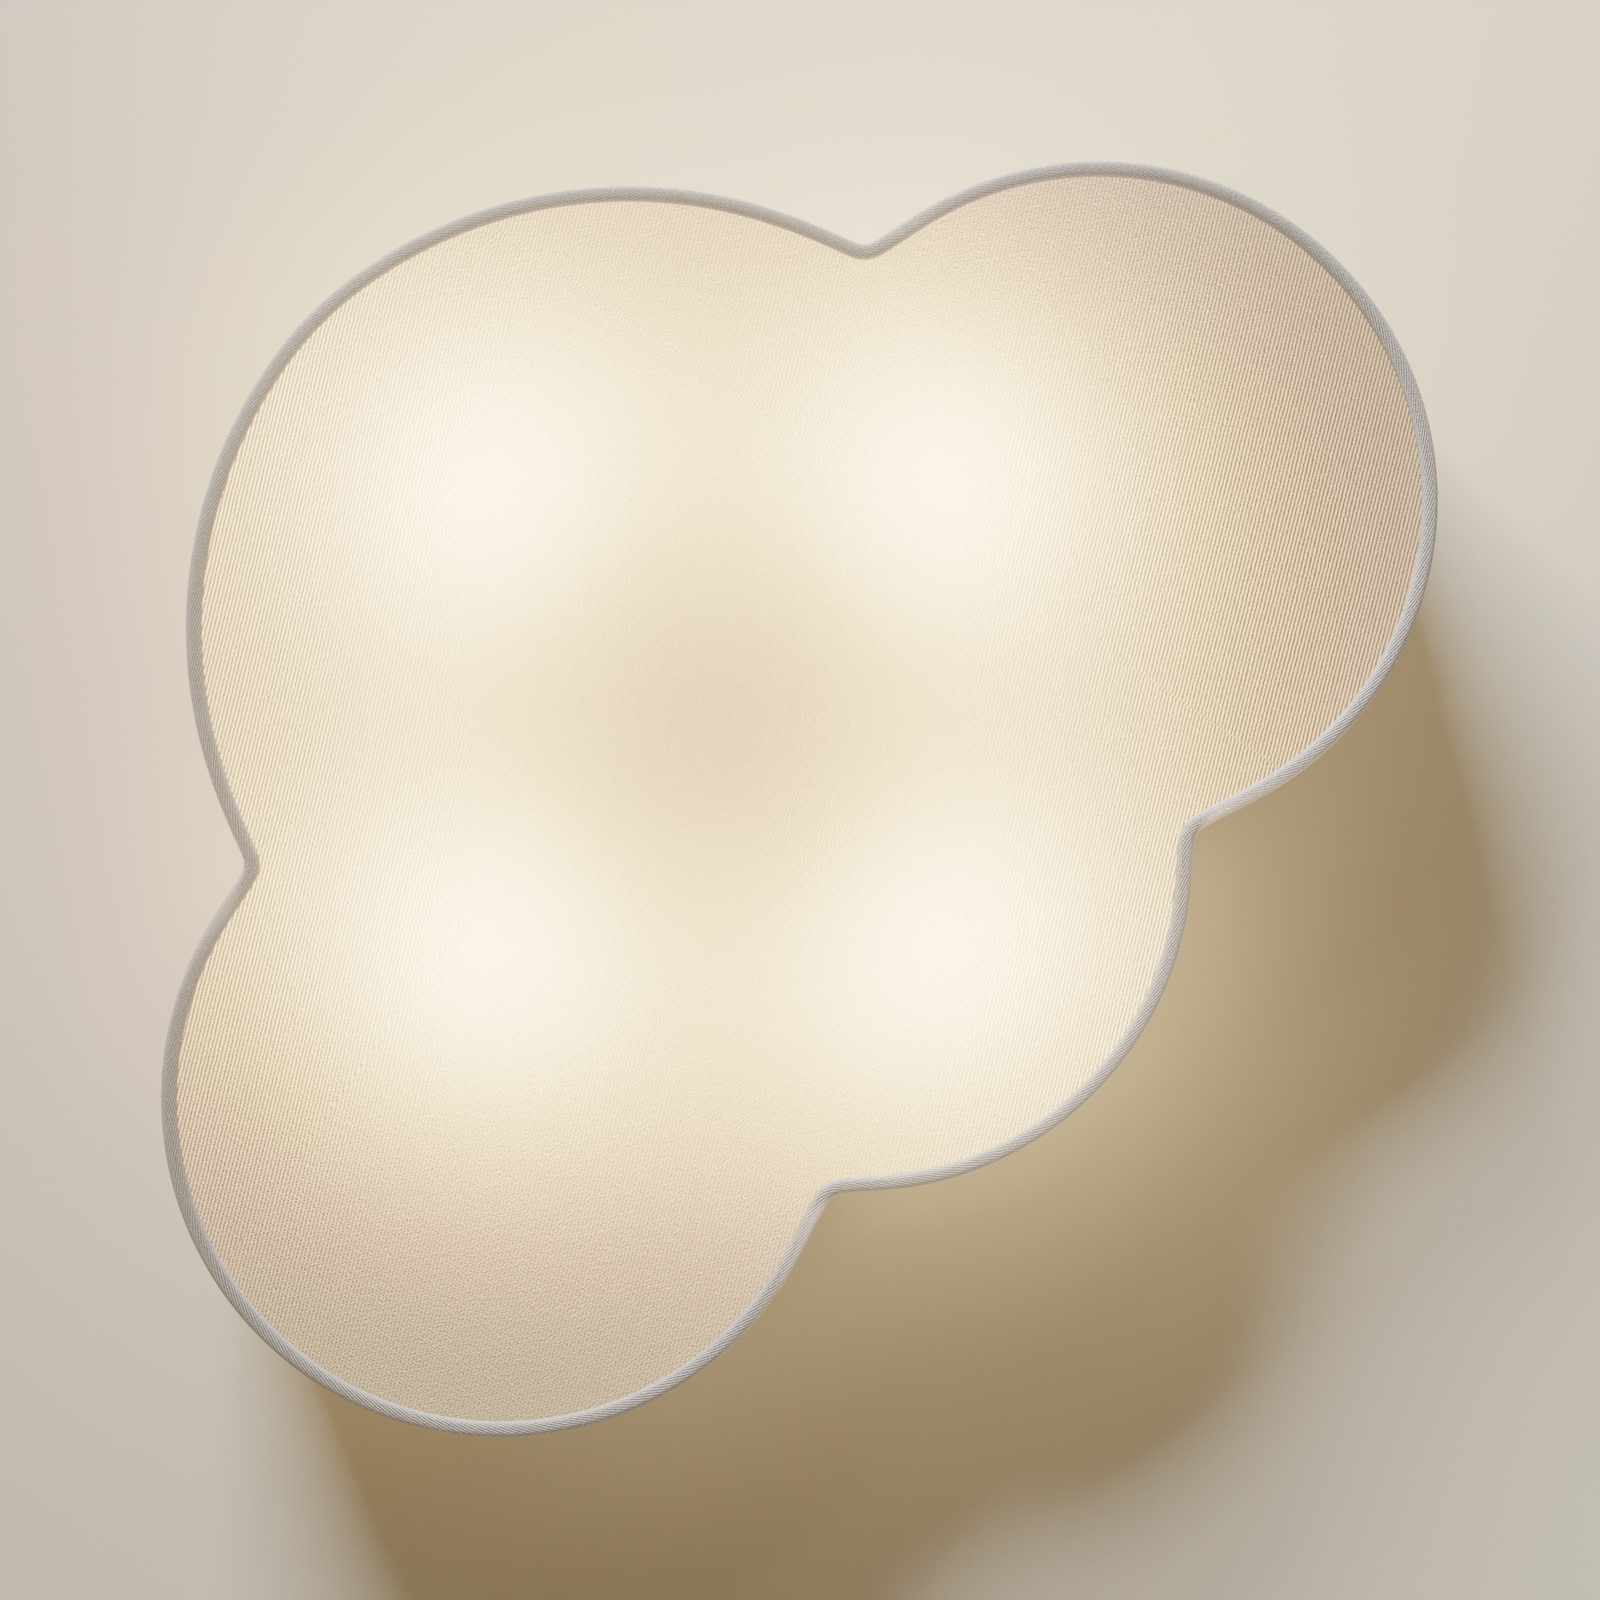 Cloud ceiling light made of textile, length 62 cm, white